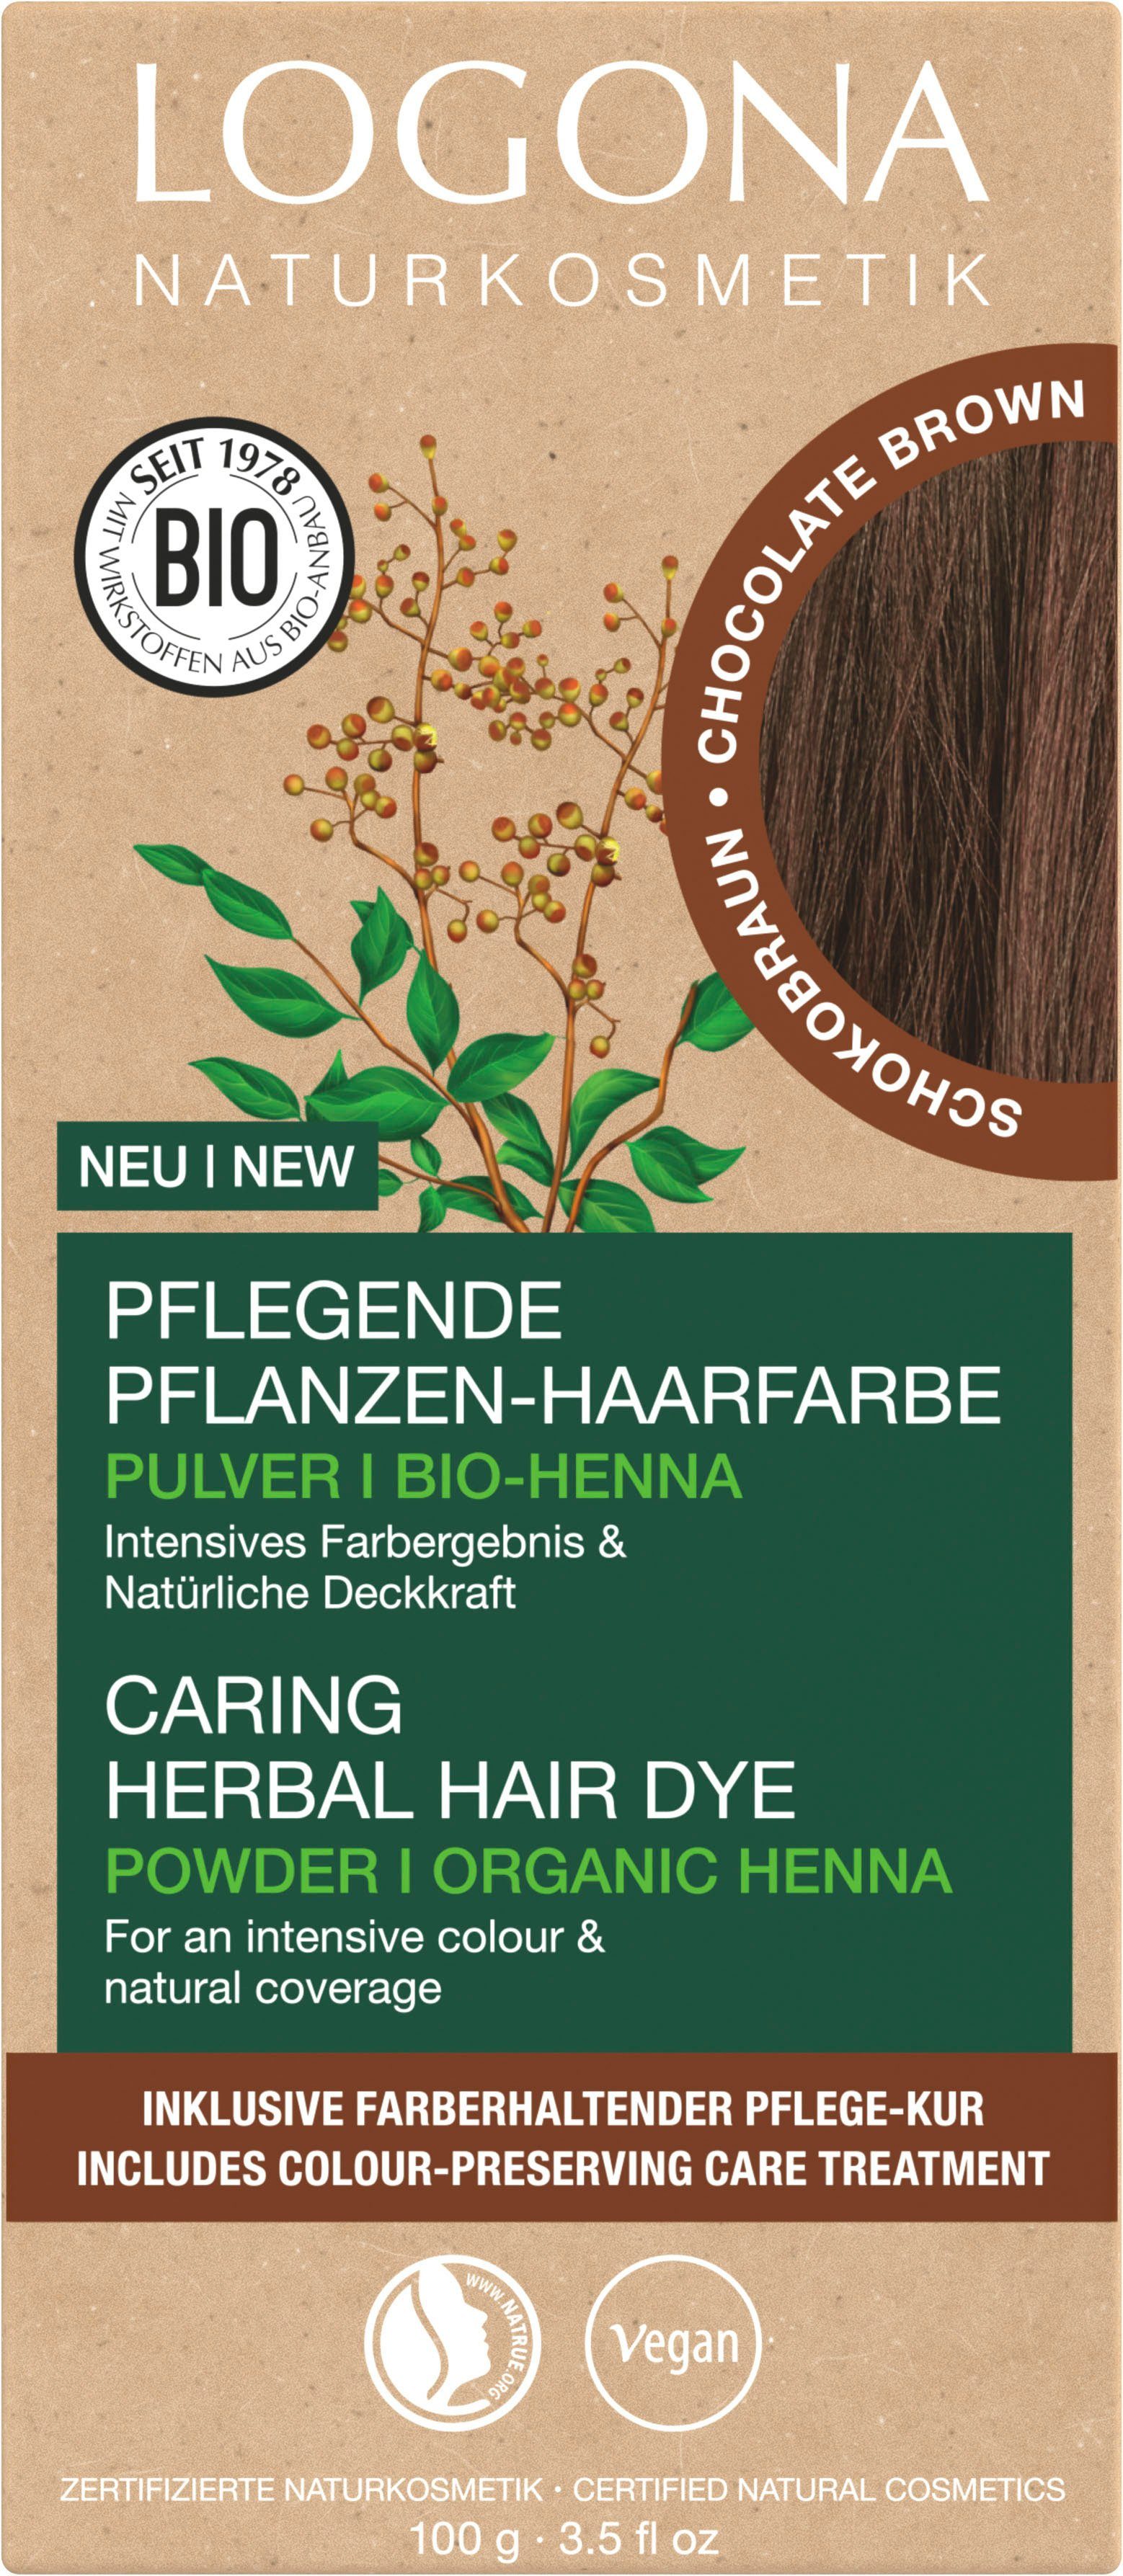 09 Pulver Haarfarbe Schokobraun LOGONA Pflanzen-Haarfarbe